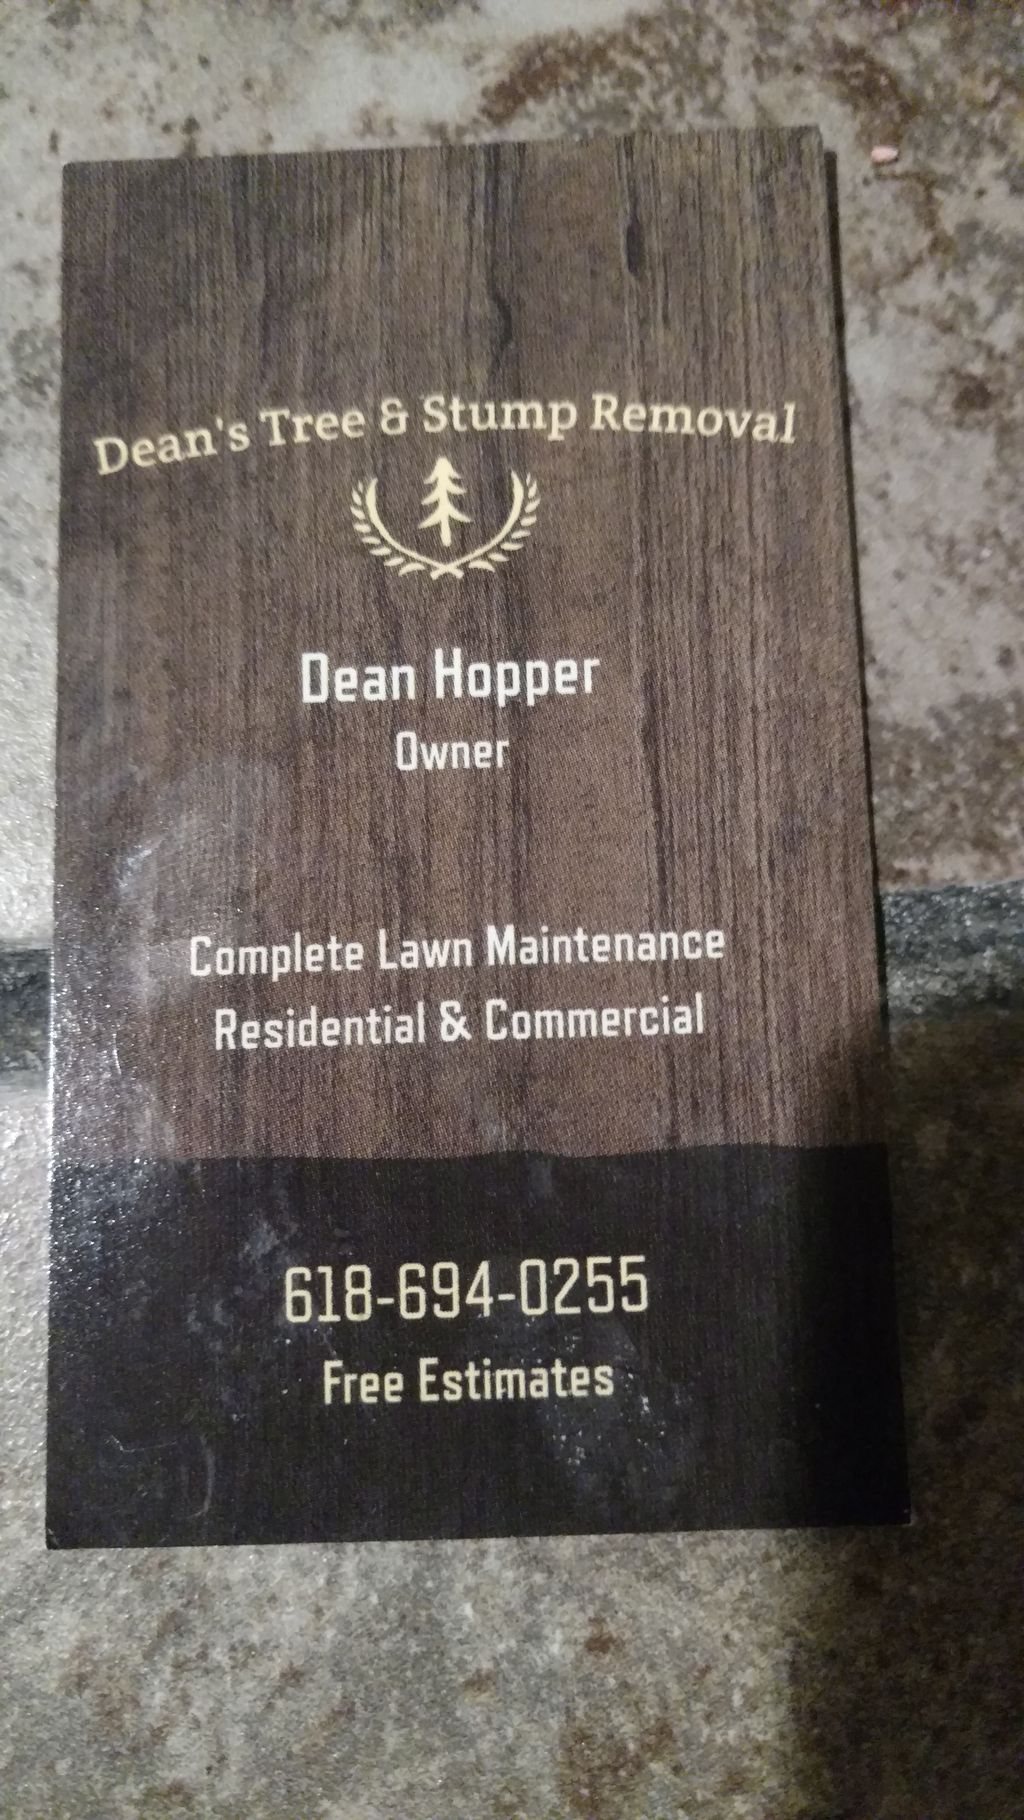 Dean's Tree & Stump Removal